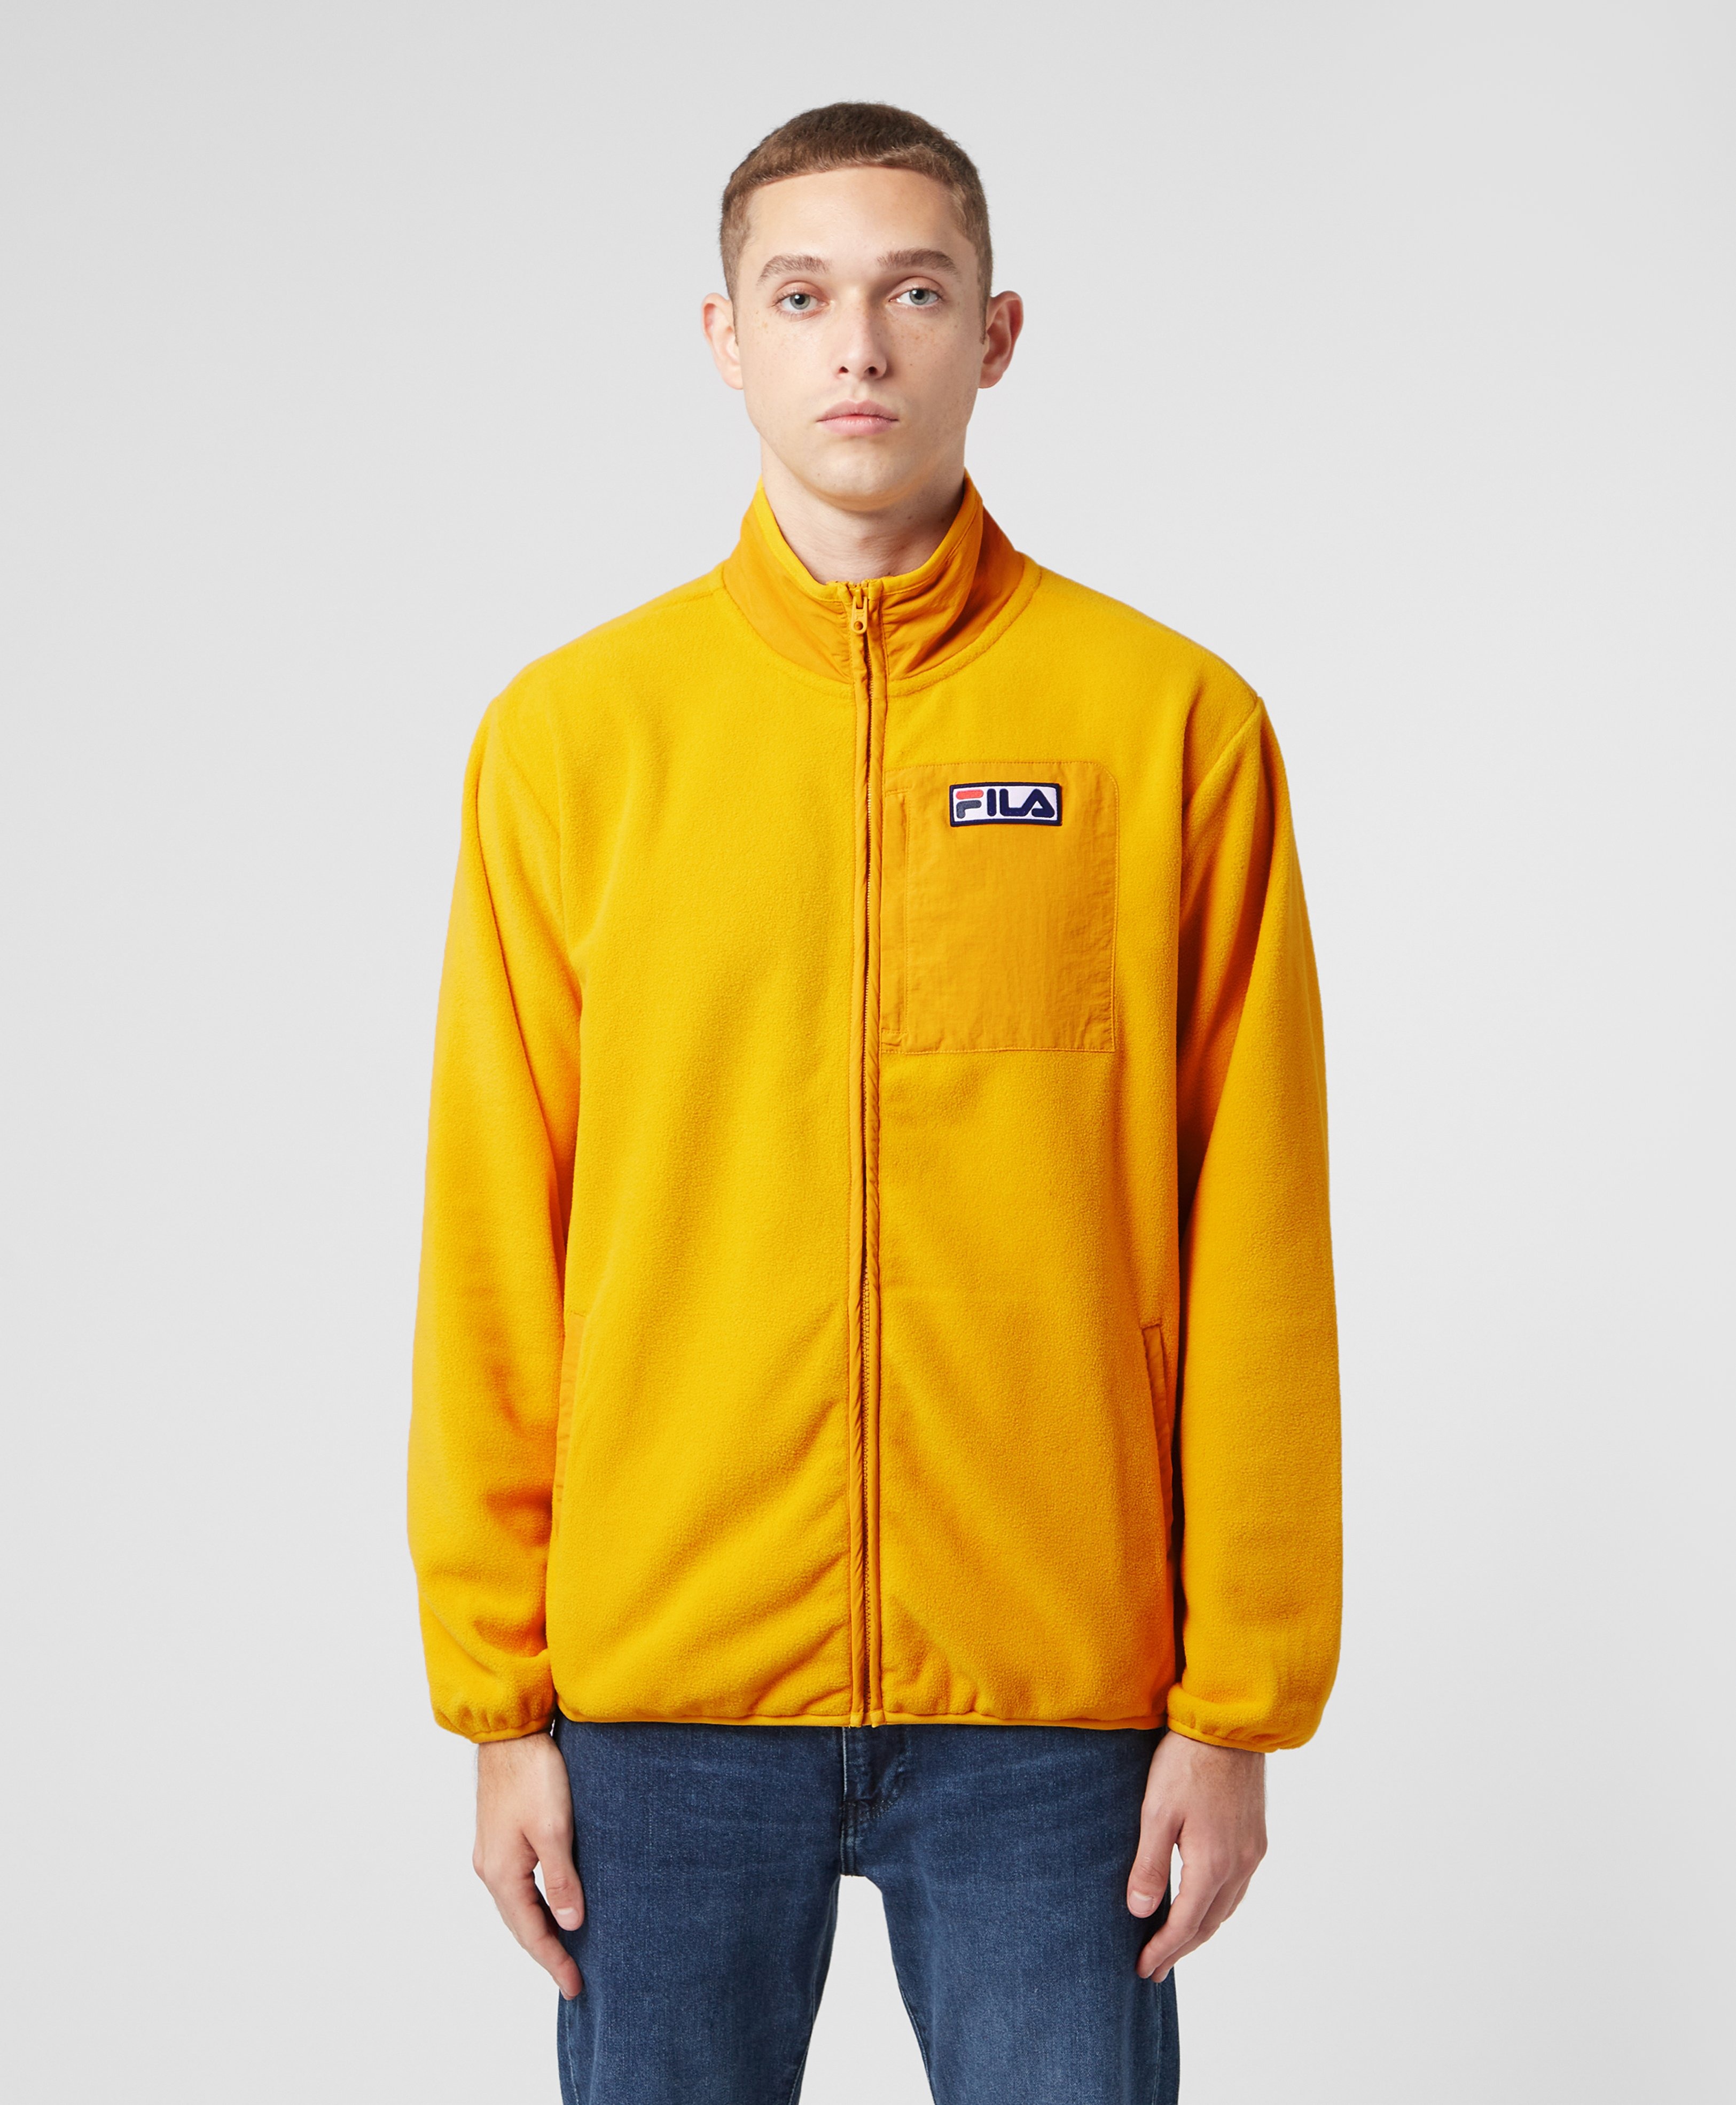 Opfattelse Vædde Bugt Yellow Fila Ramous Jacket | scotts Menswear